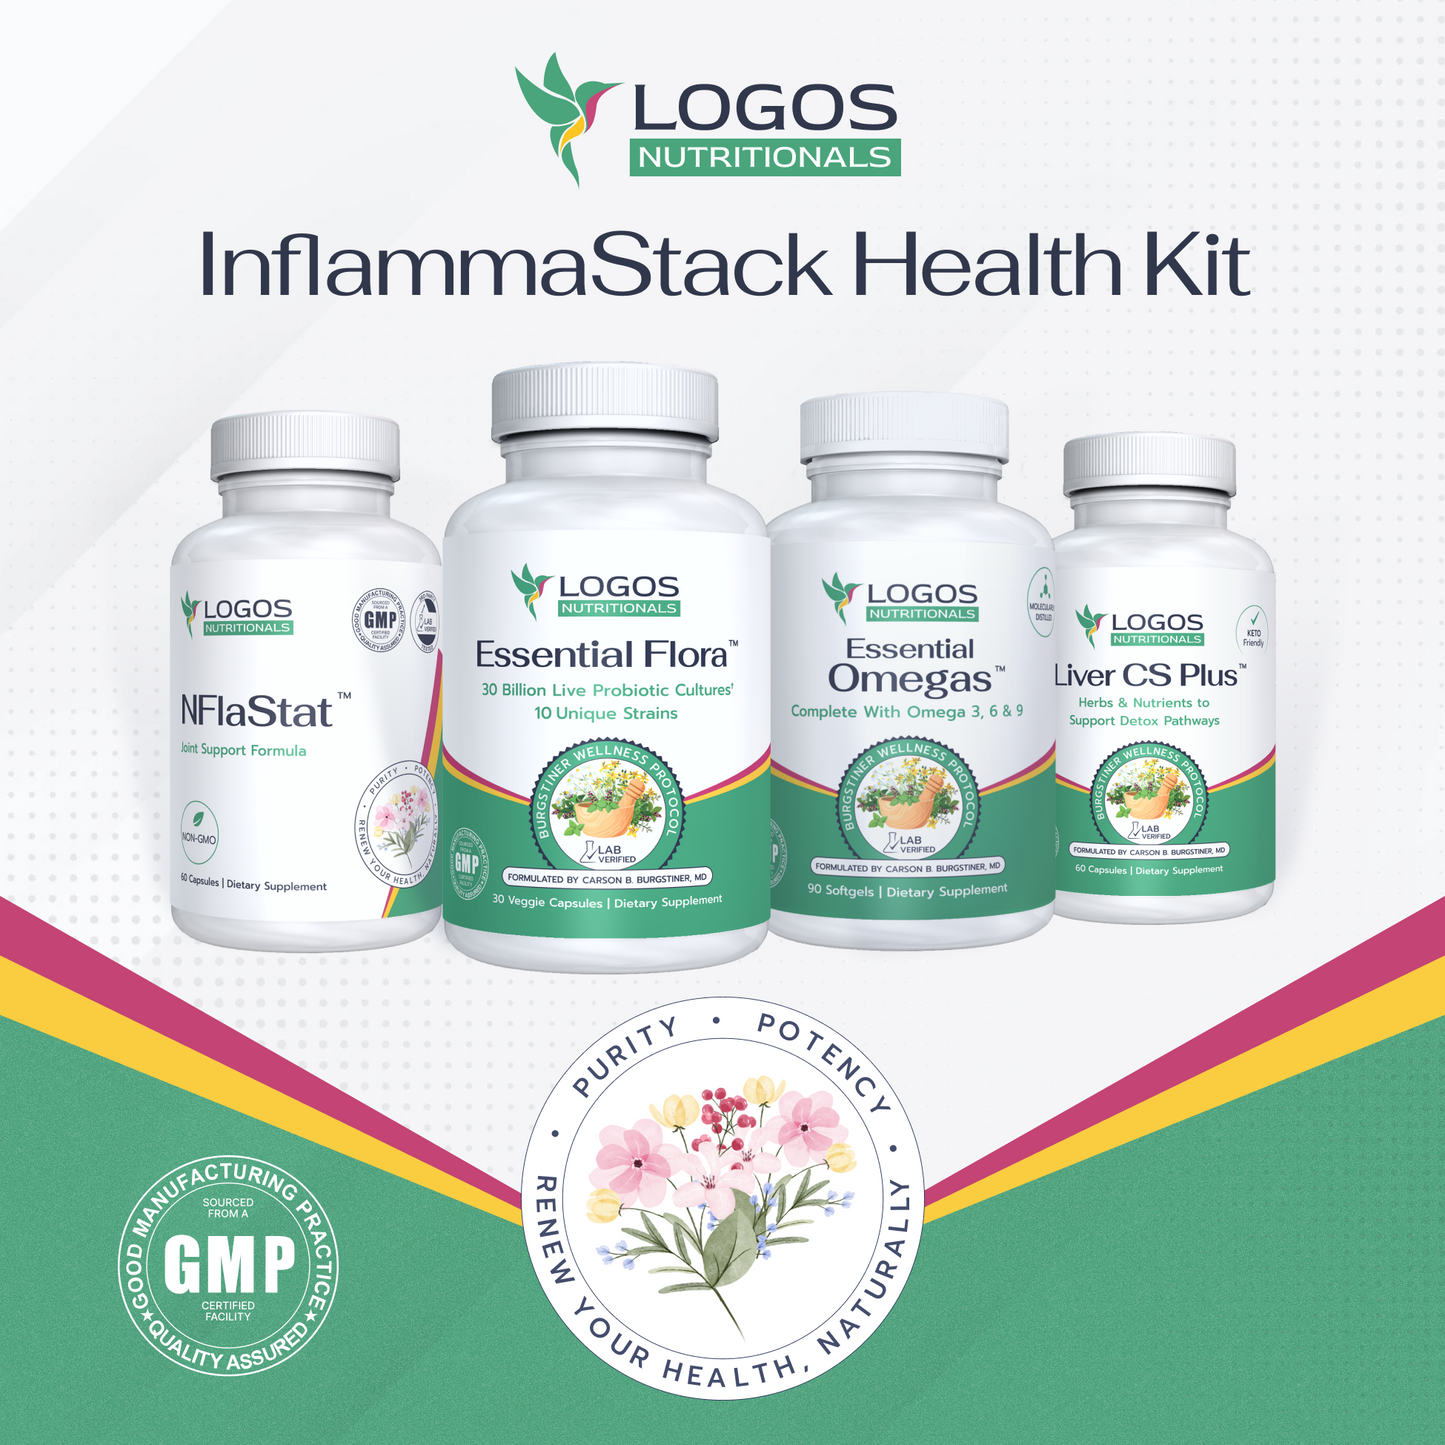 InflammaStack Health Kit